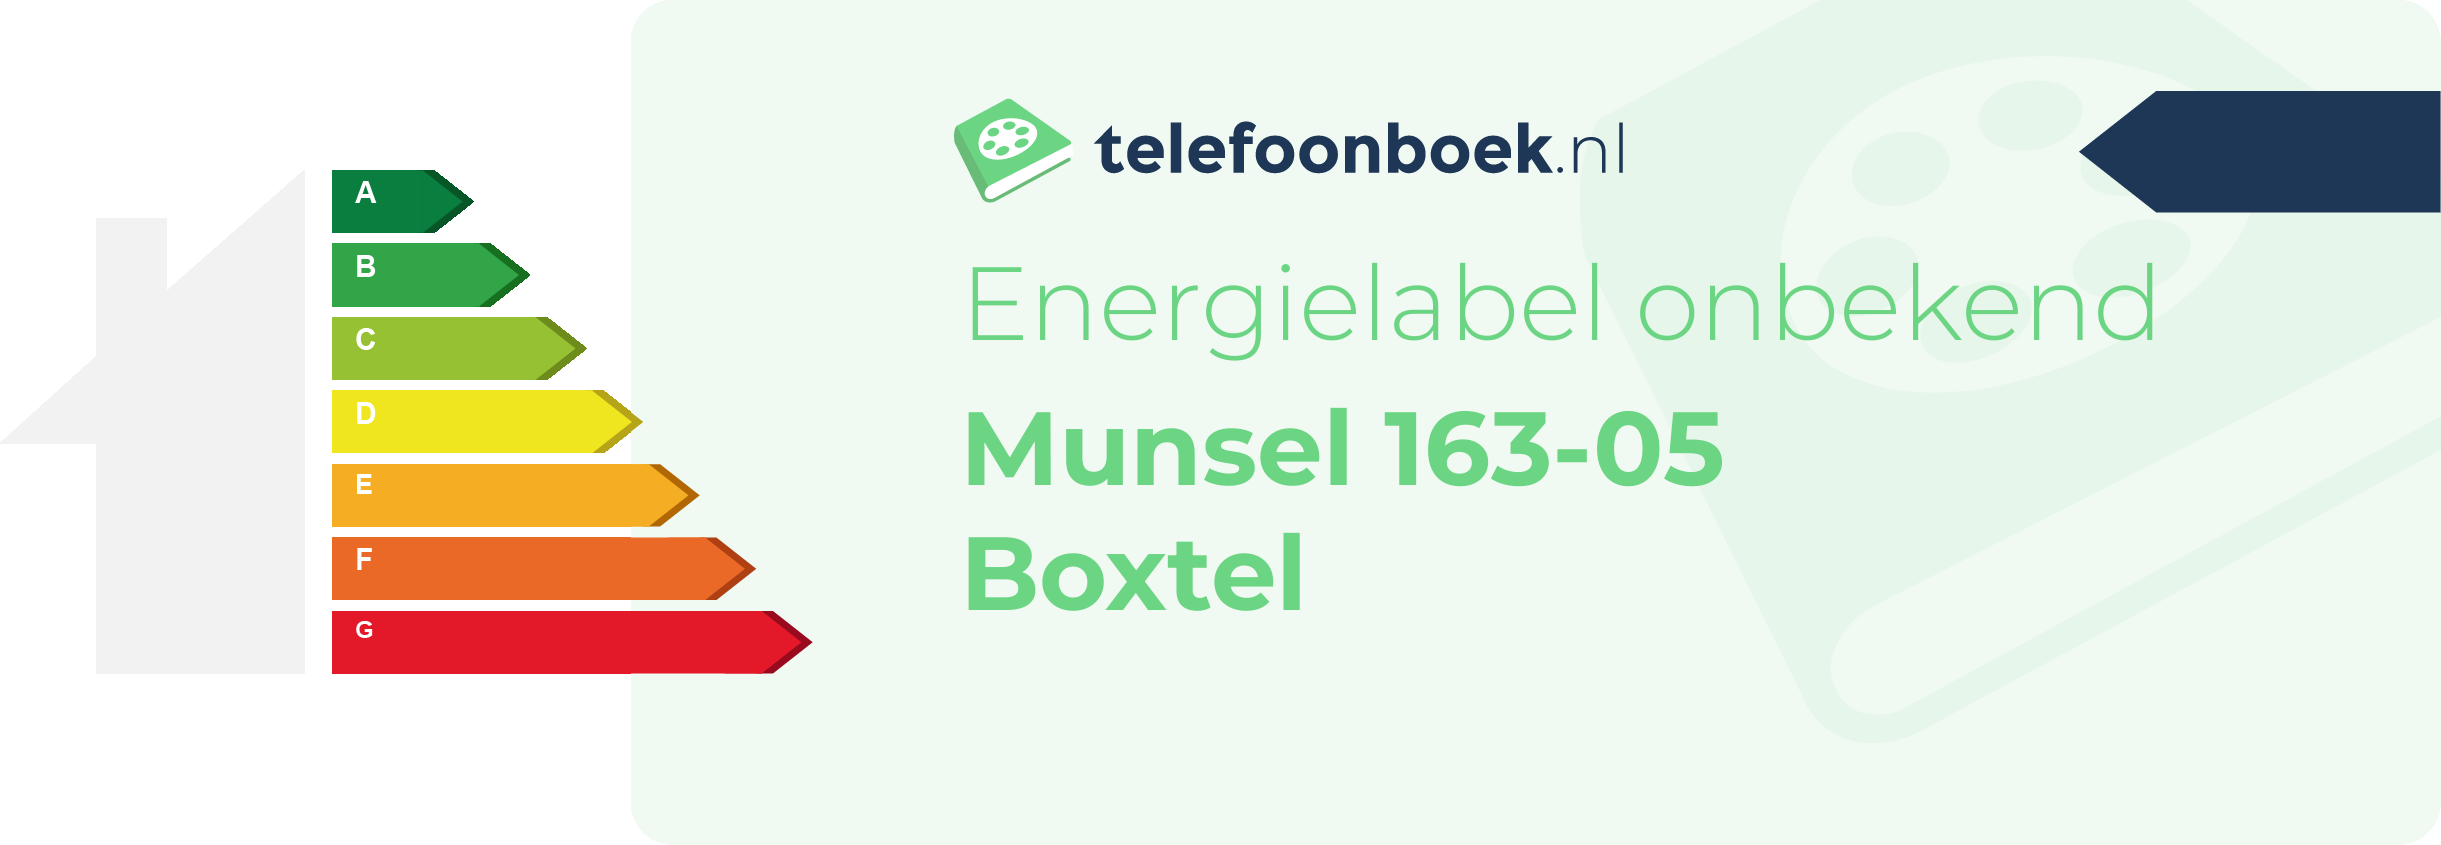 Energielabel Munsel 163-05 Boxtel